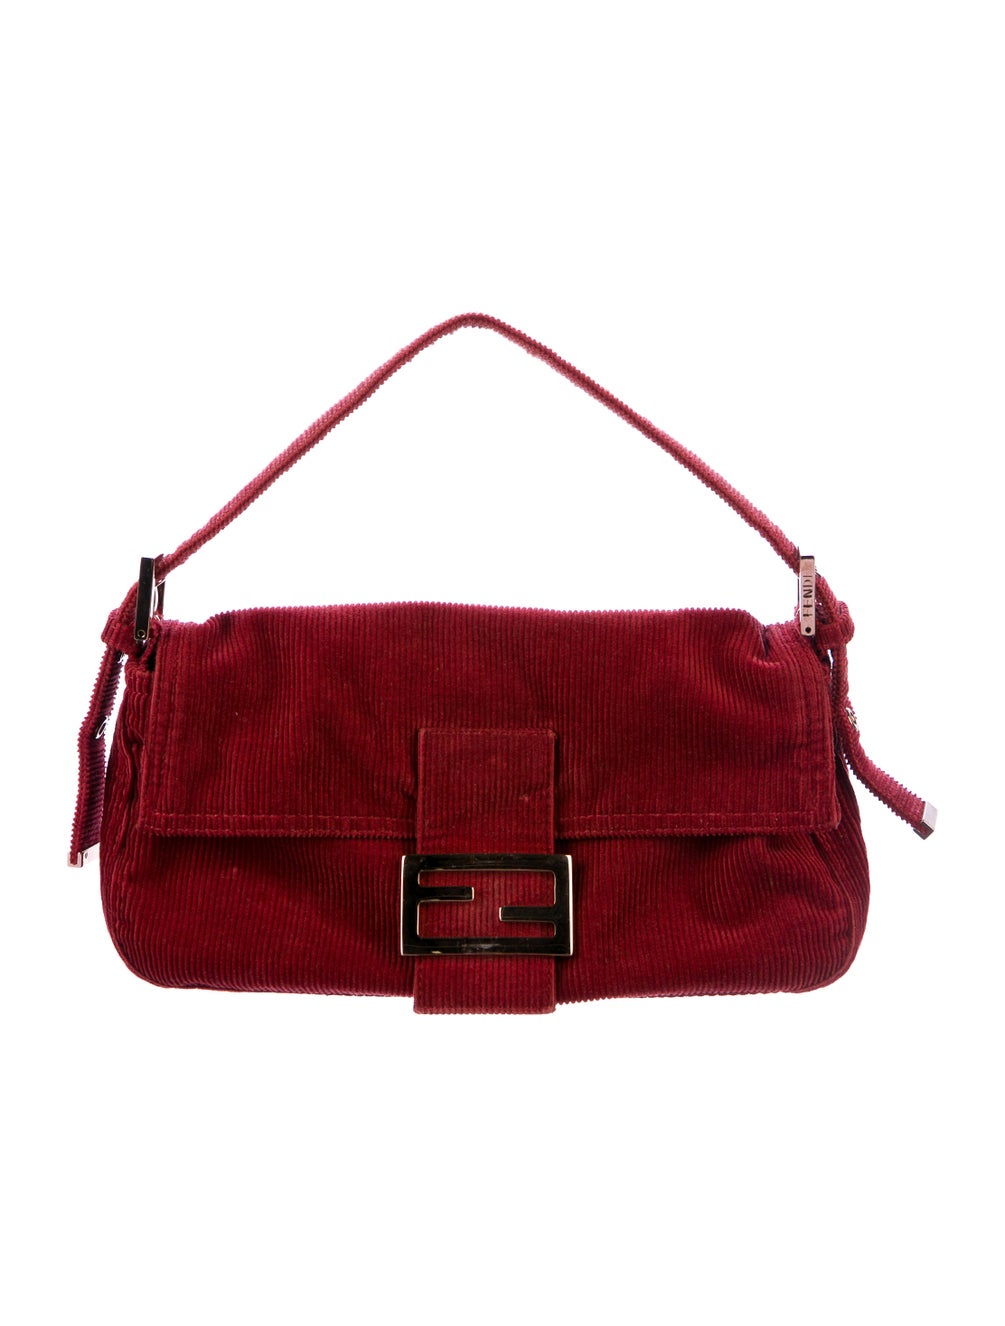 Fendi Corduroy Baguette Handbag in Red